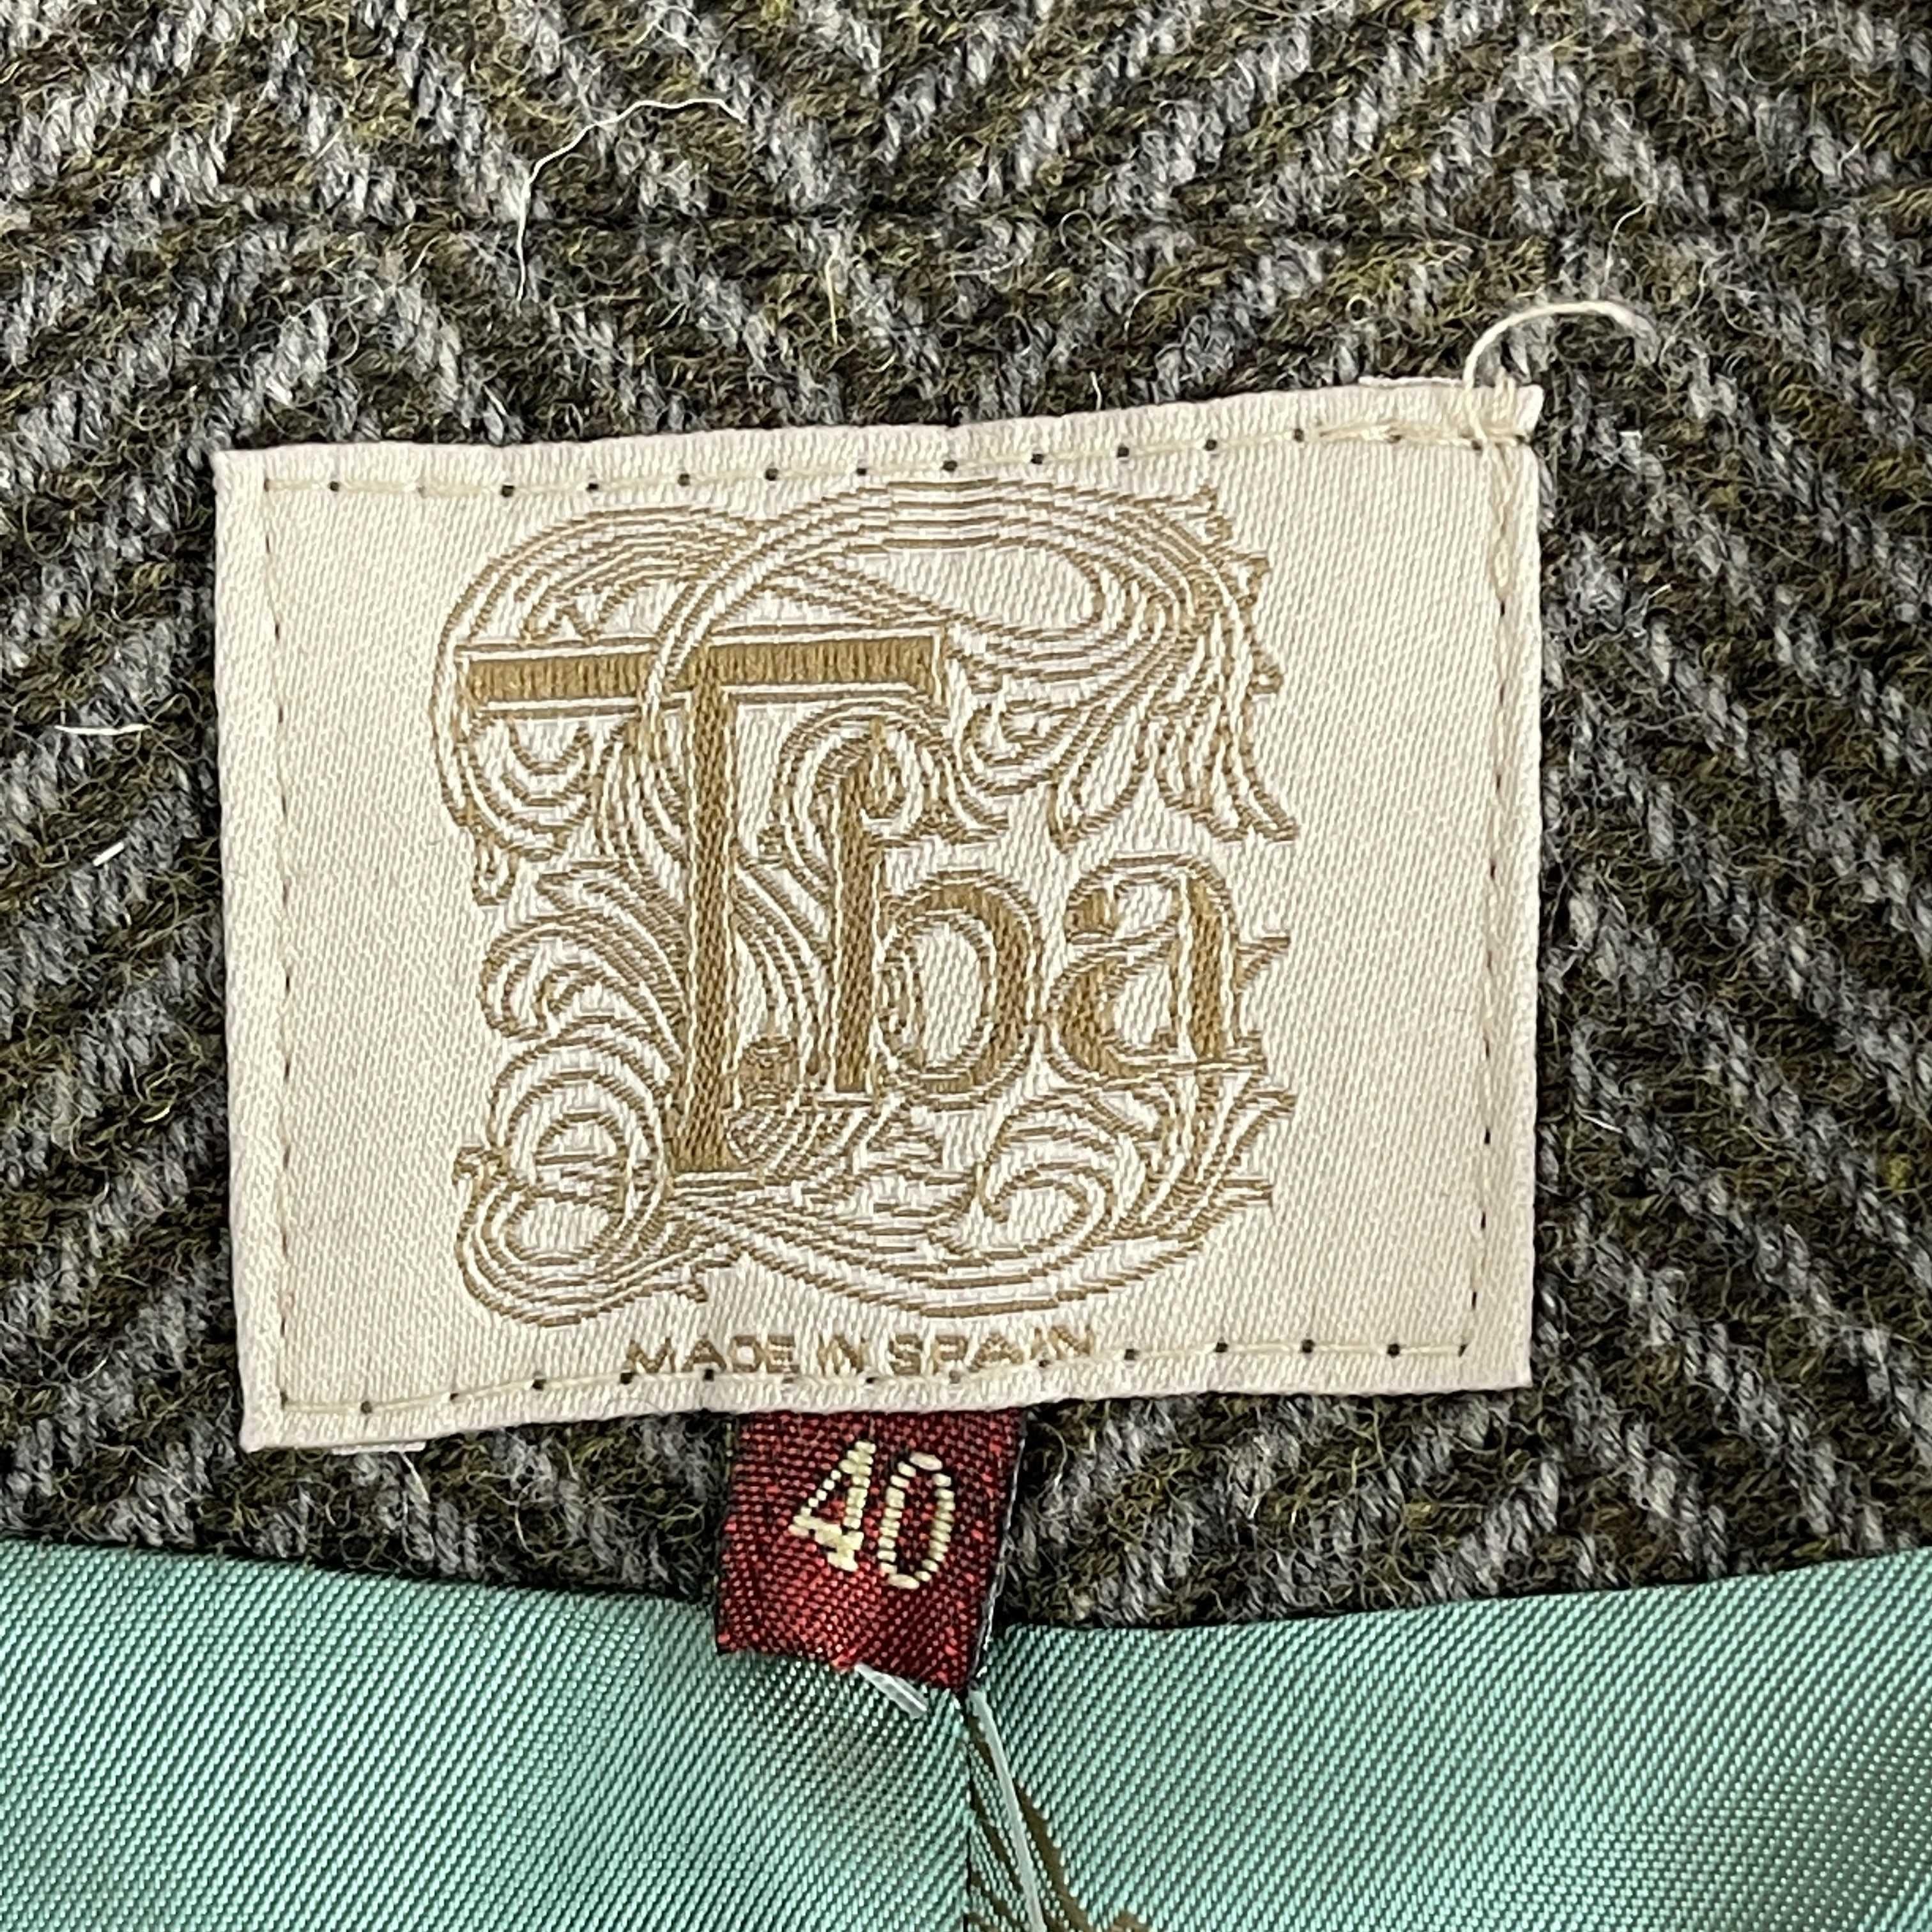 Women's T.ba New w/ Tags Tasmanian Tweed Lace Faux Fur Grey / Brown 40 US Medium For Sale